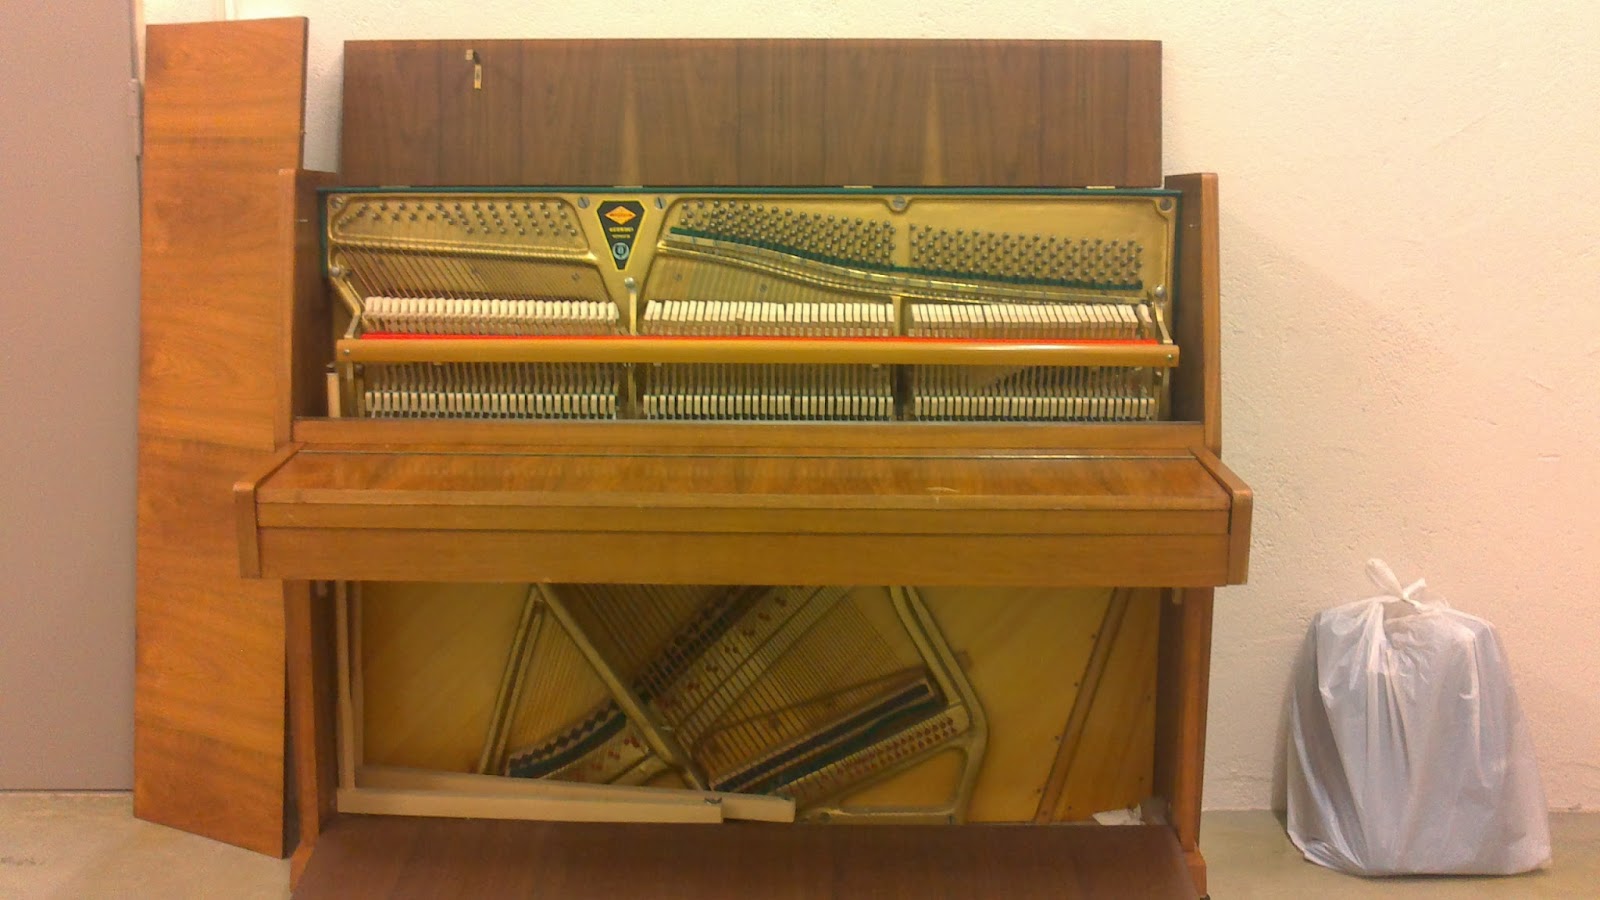 Nickleus Music Technology Blog: Cherny upright piano